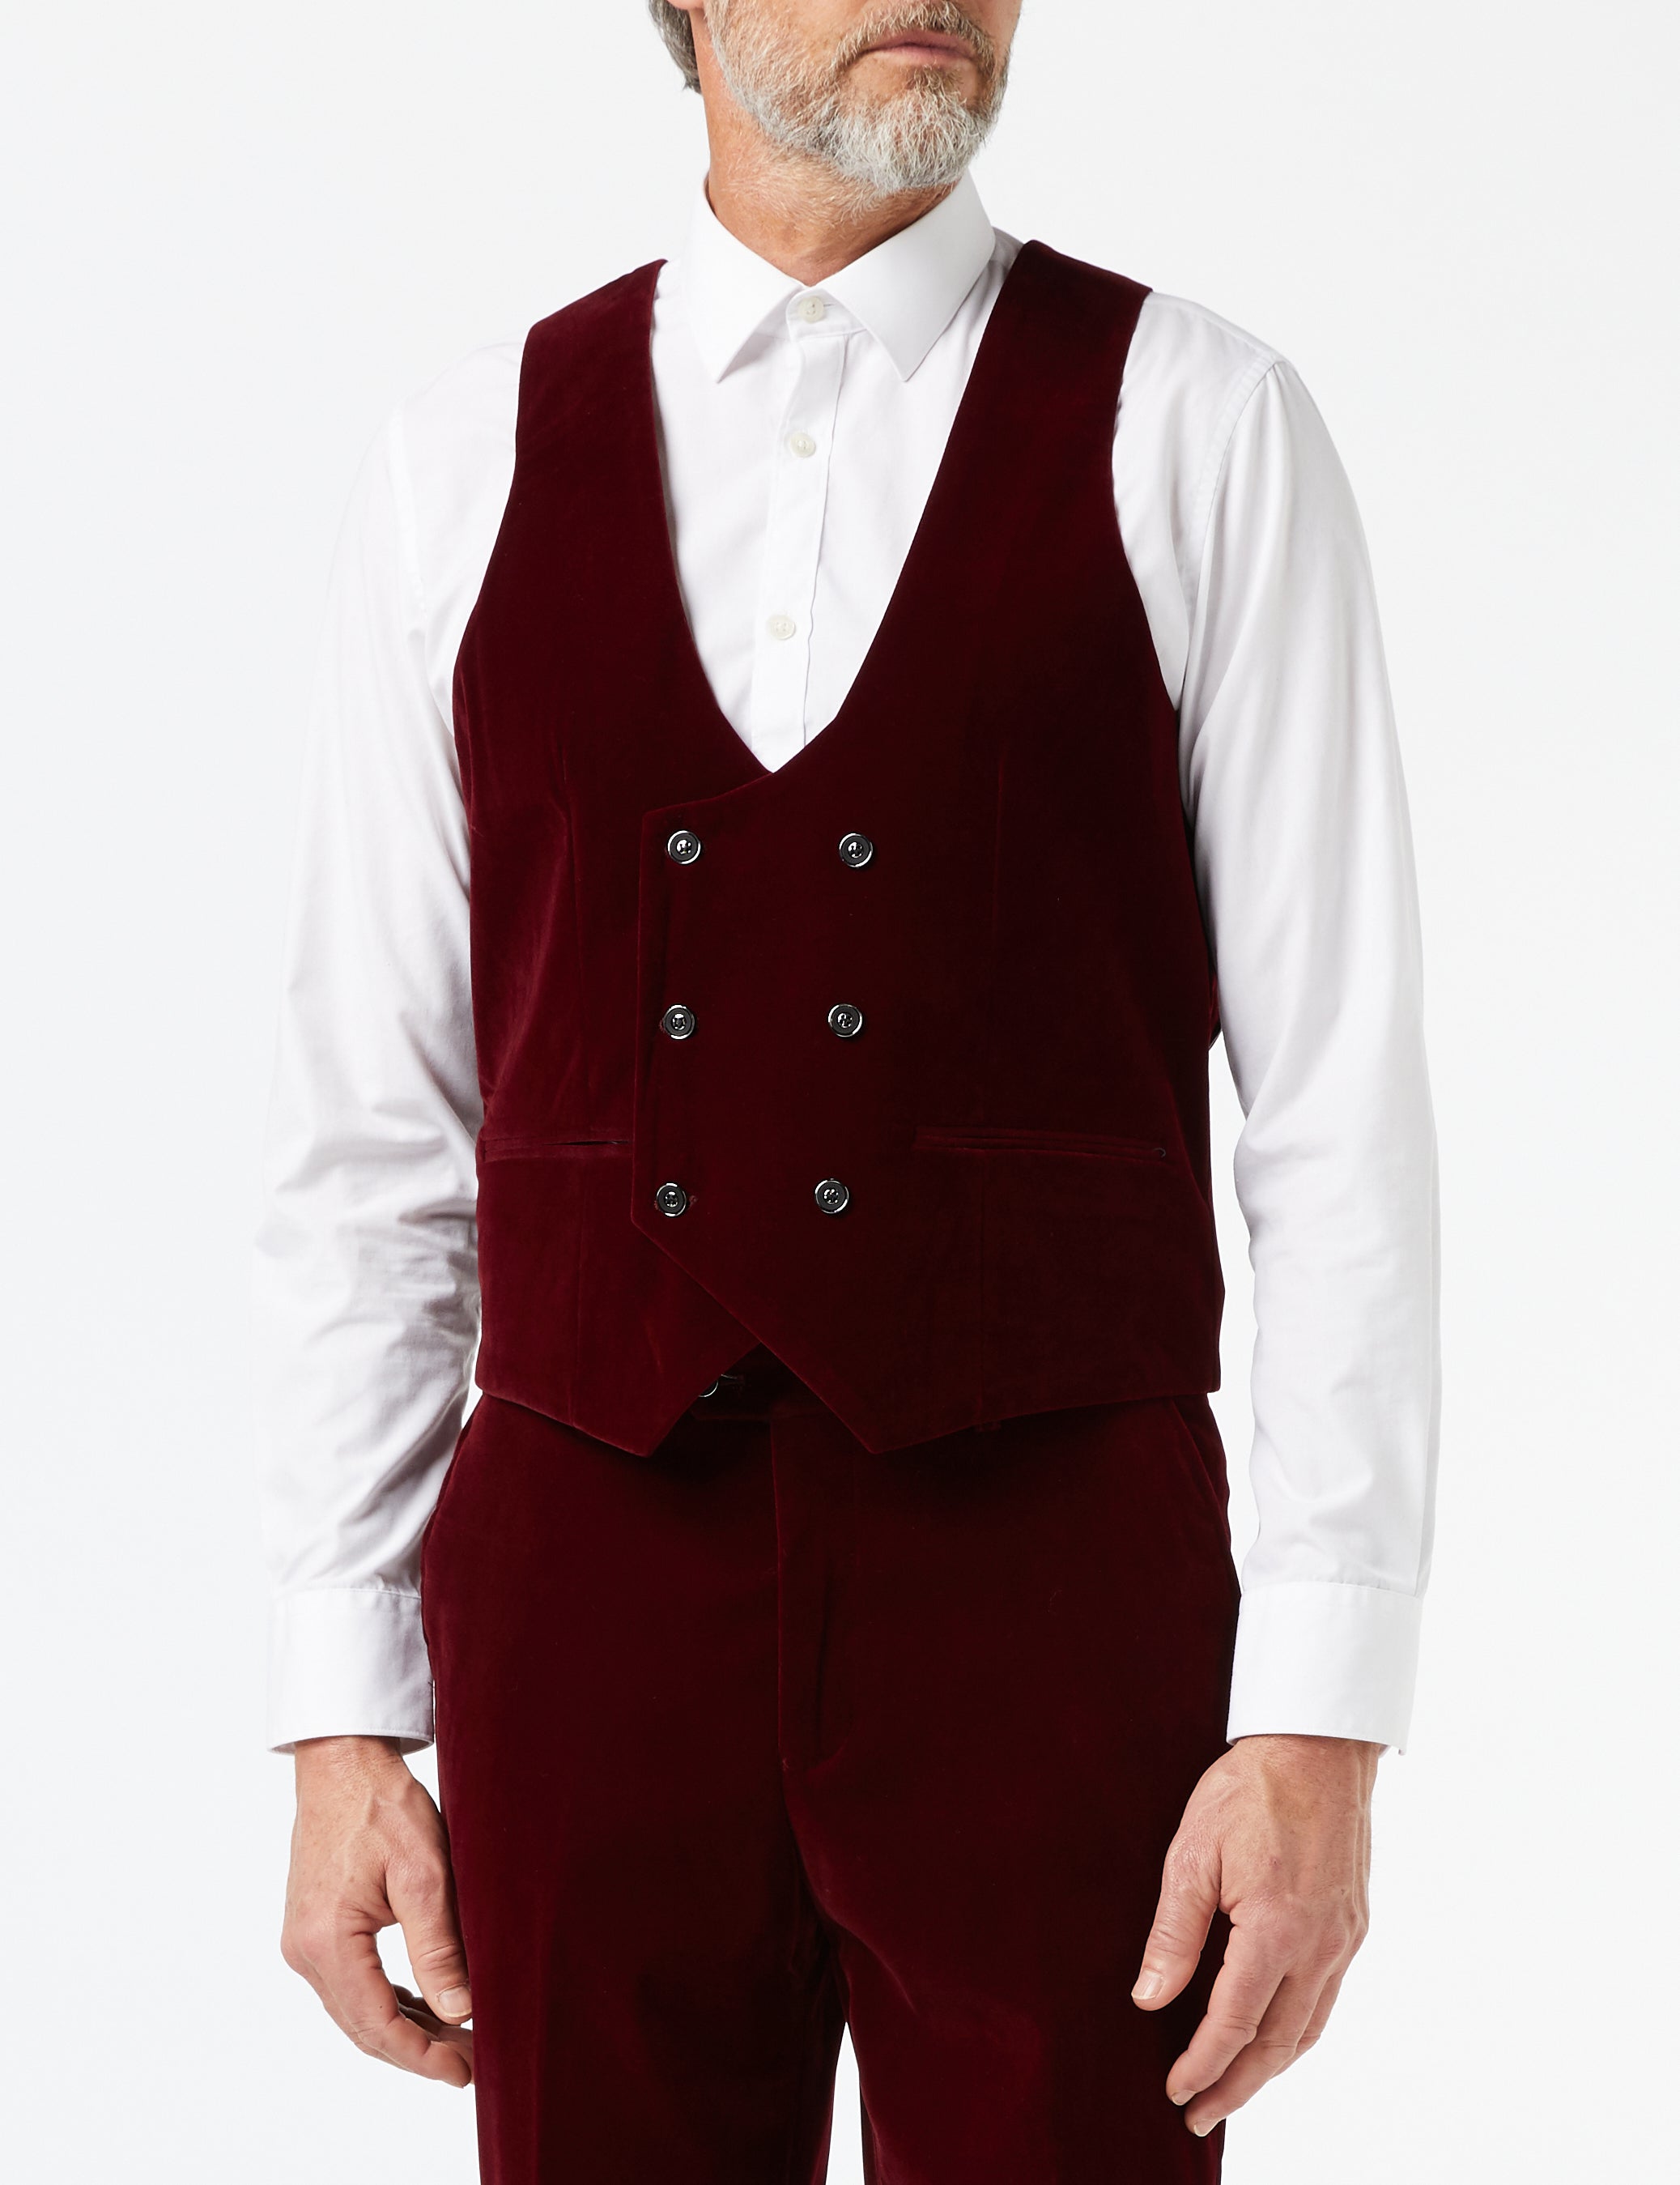 Mens 3 Piece Velvet Suit Maroon Tailored Jacket Waistcoat Trousers Wedding Party